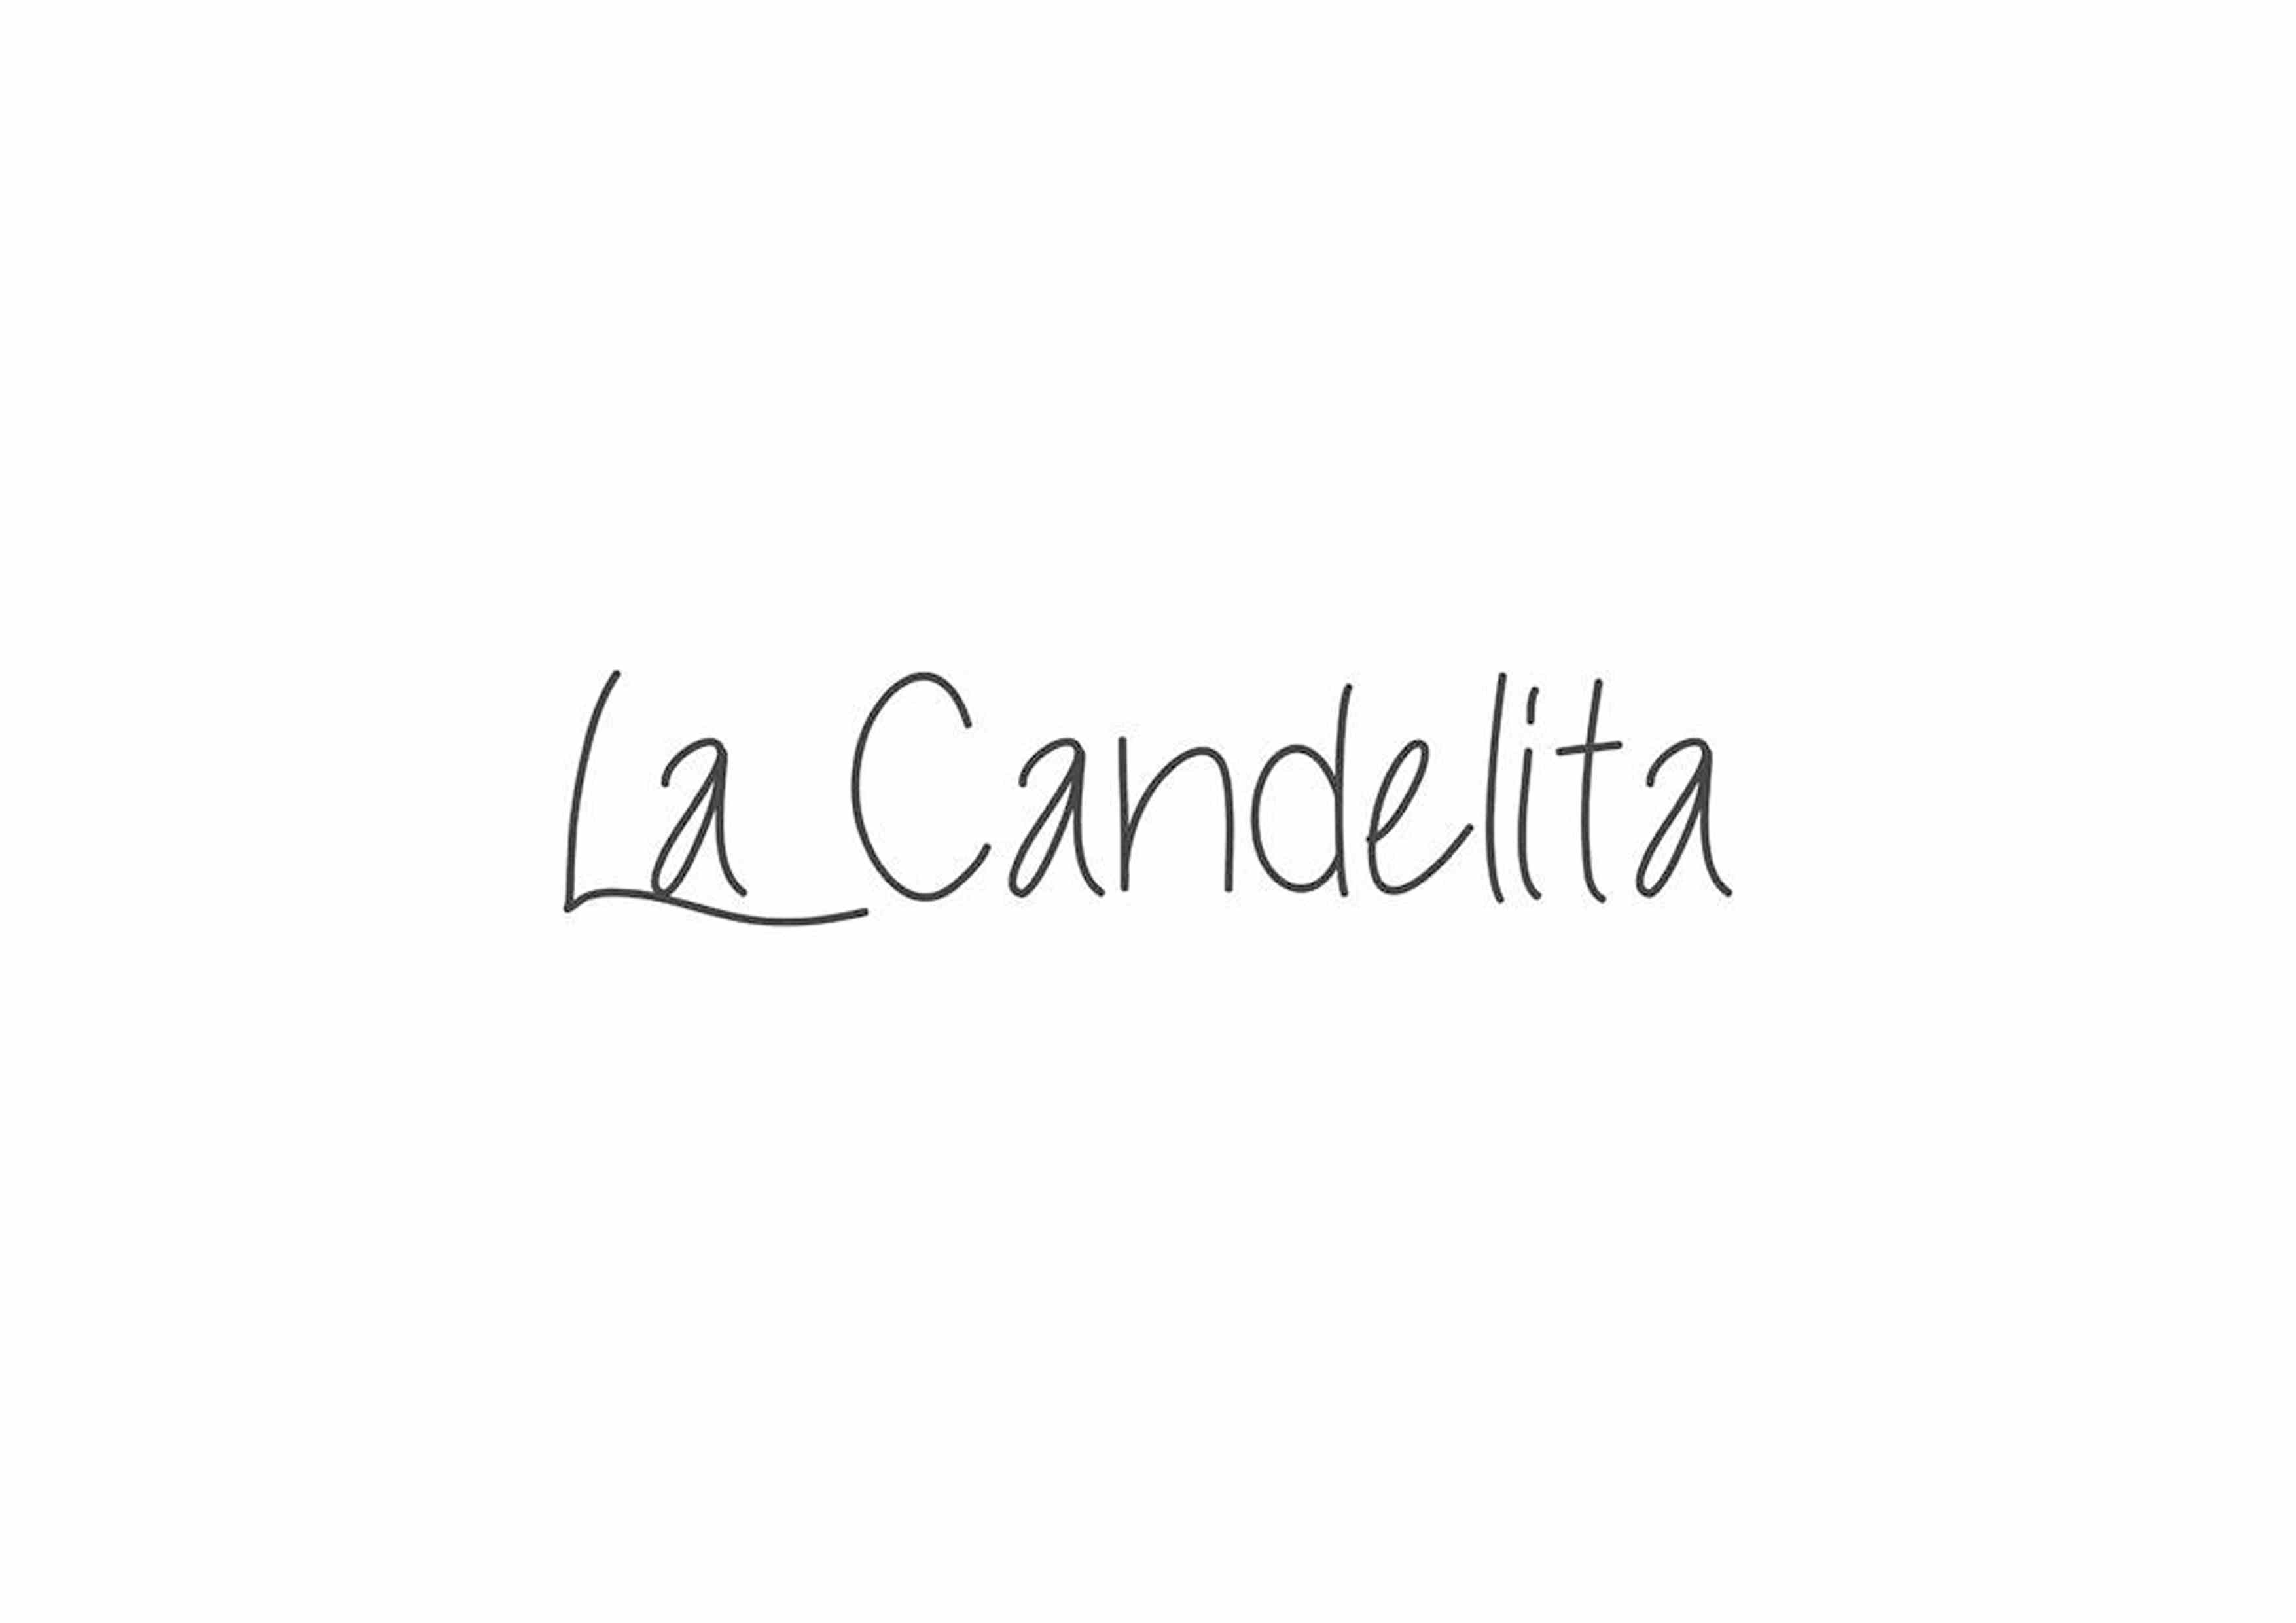 La Candelita